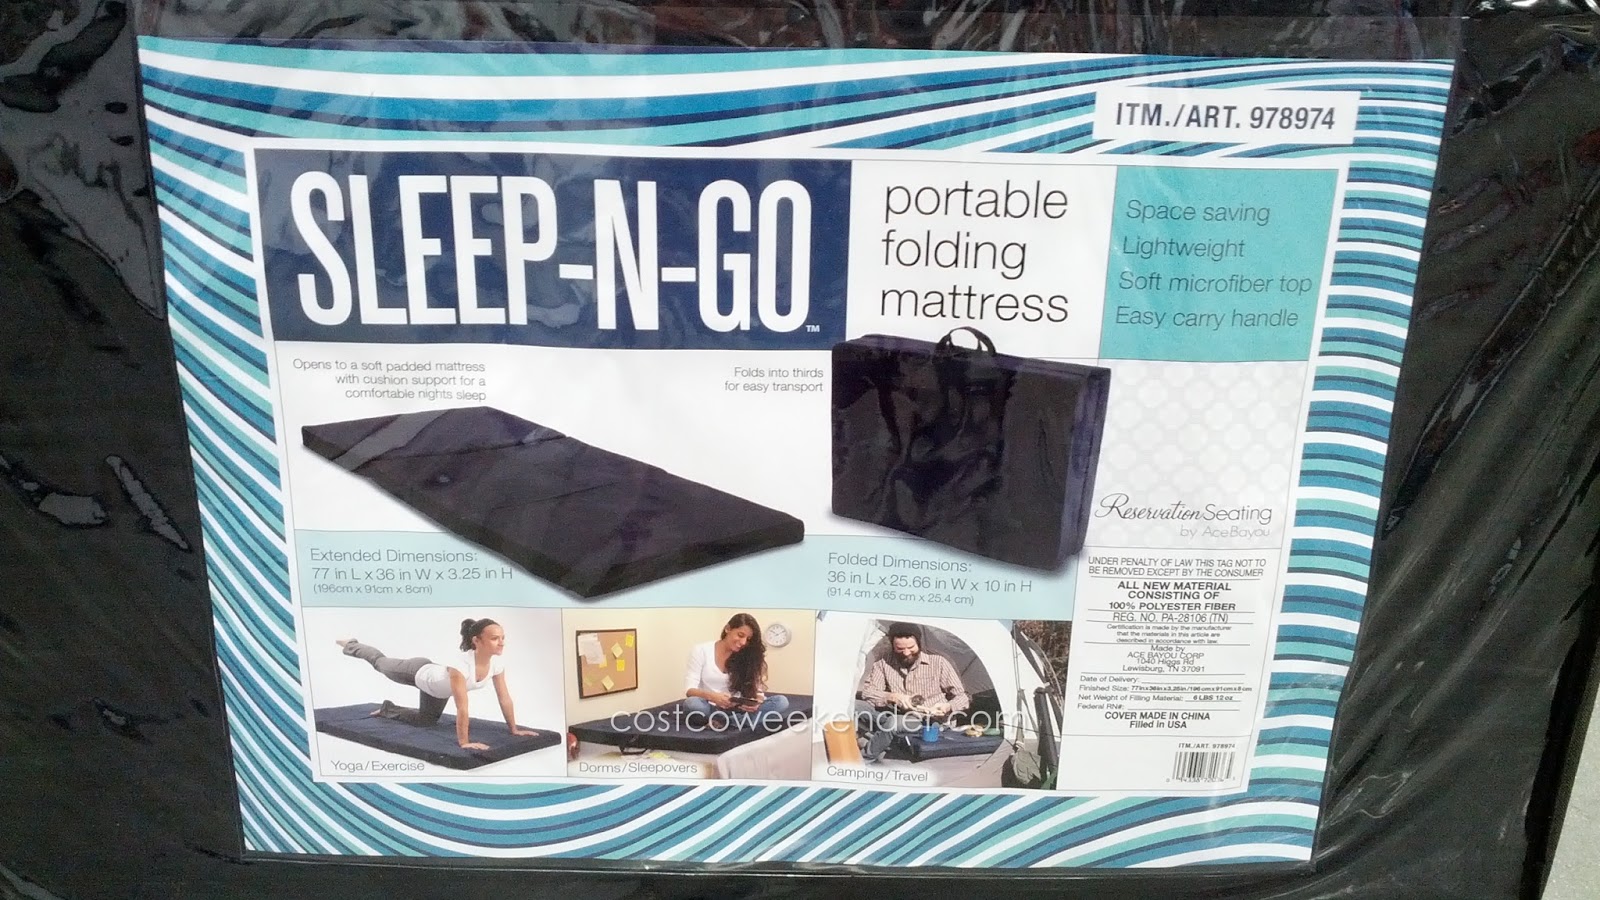 sleep and go portable folding mattress